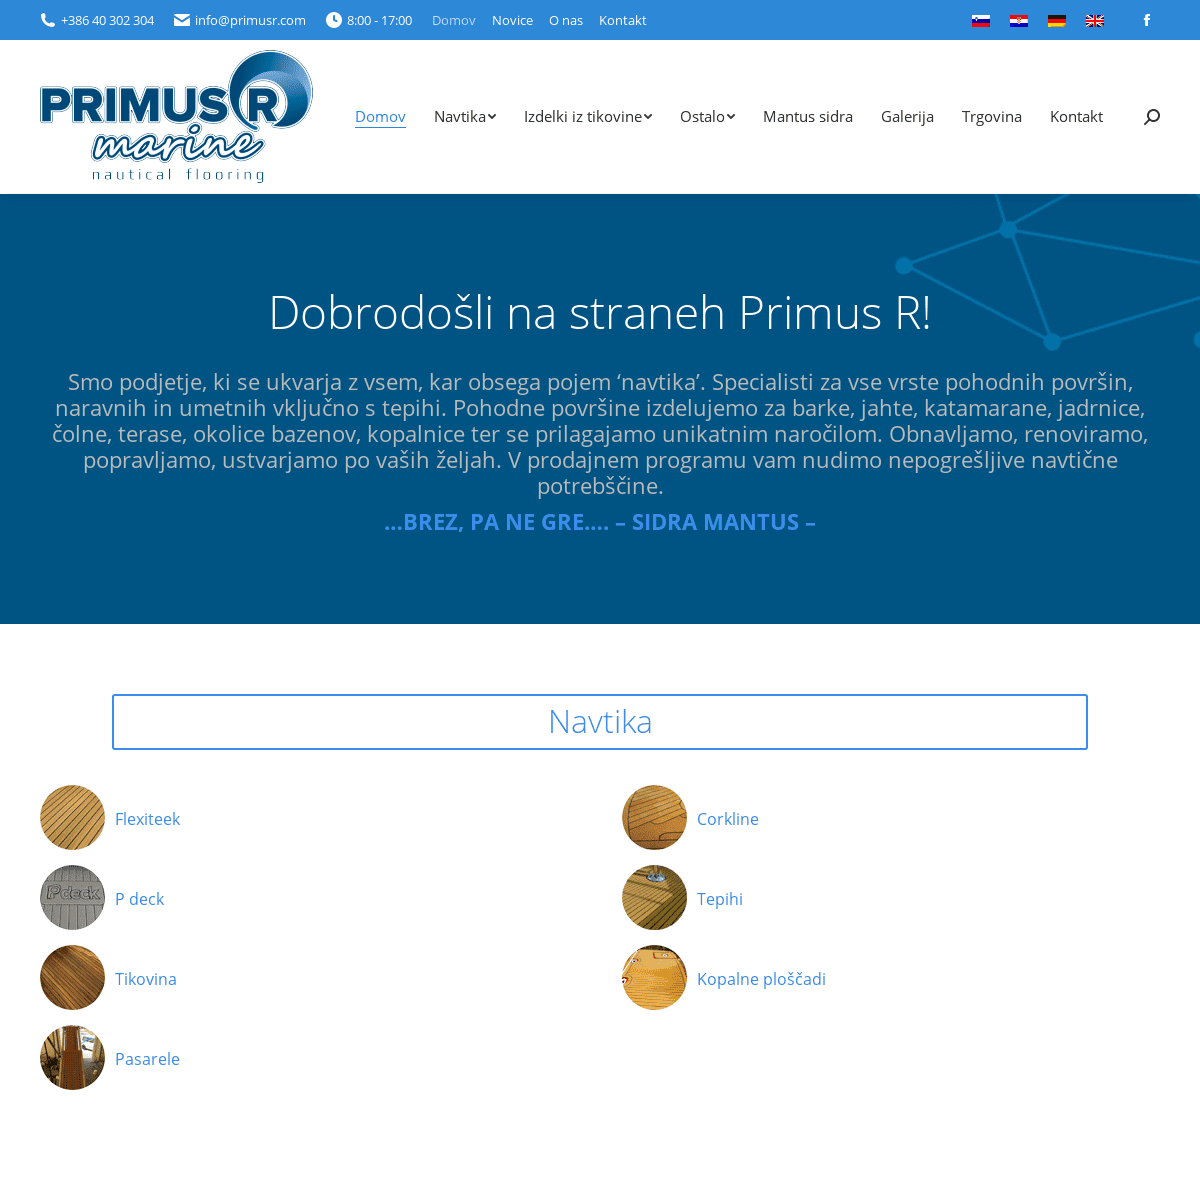 A complete backup of primusr.com